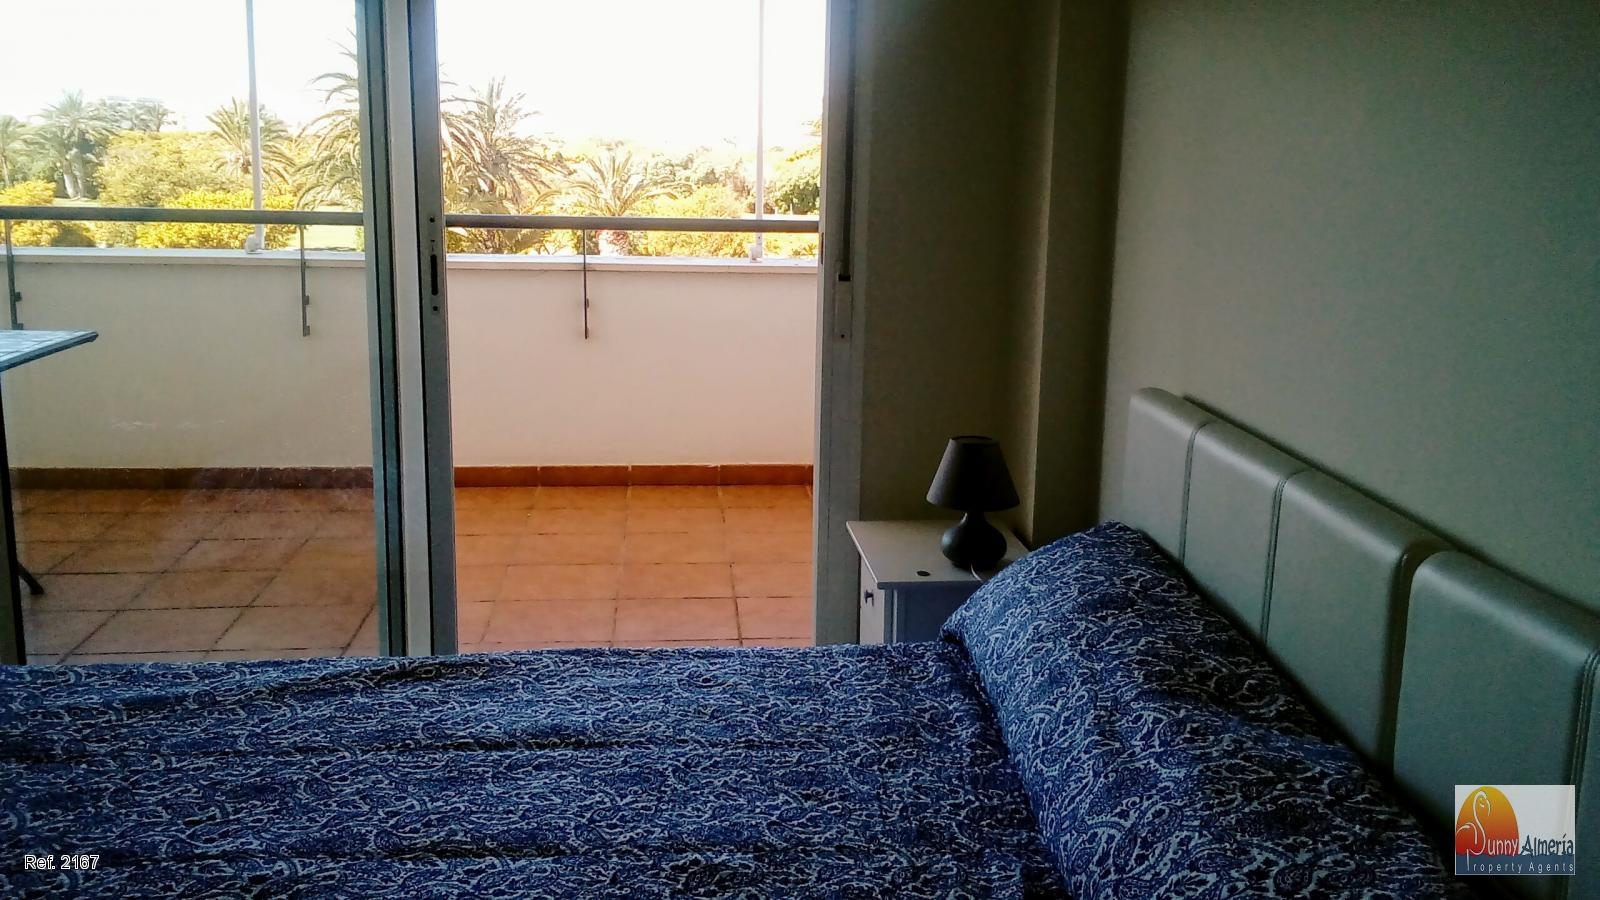 Apartment for sale in Carretera Ciudad de Cadiz 1A (Roquetas de Mar), 165.000 €